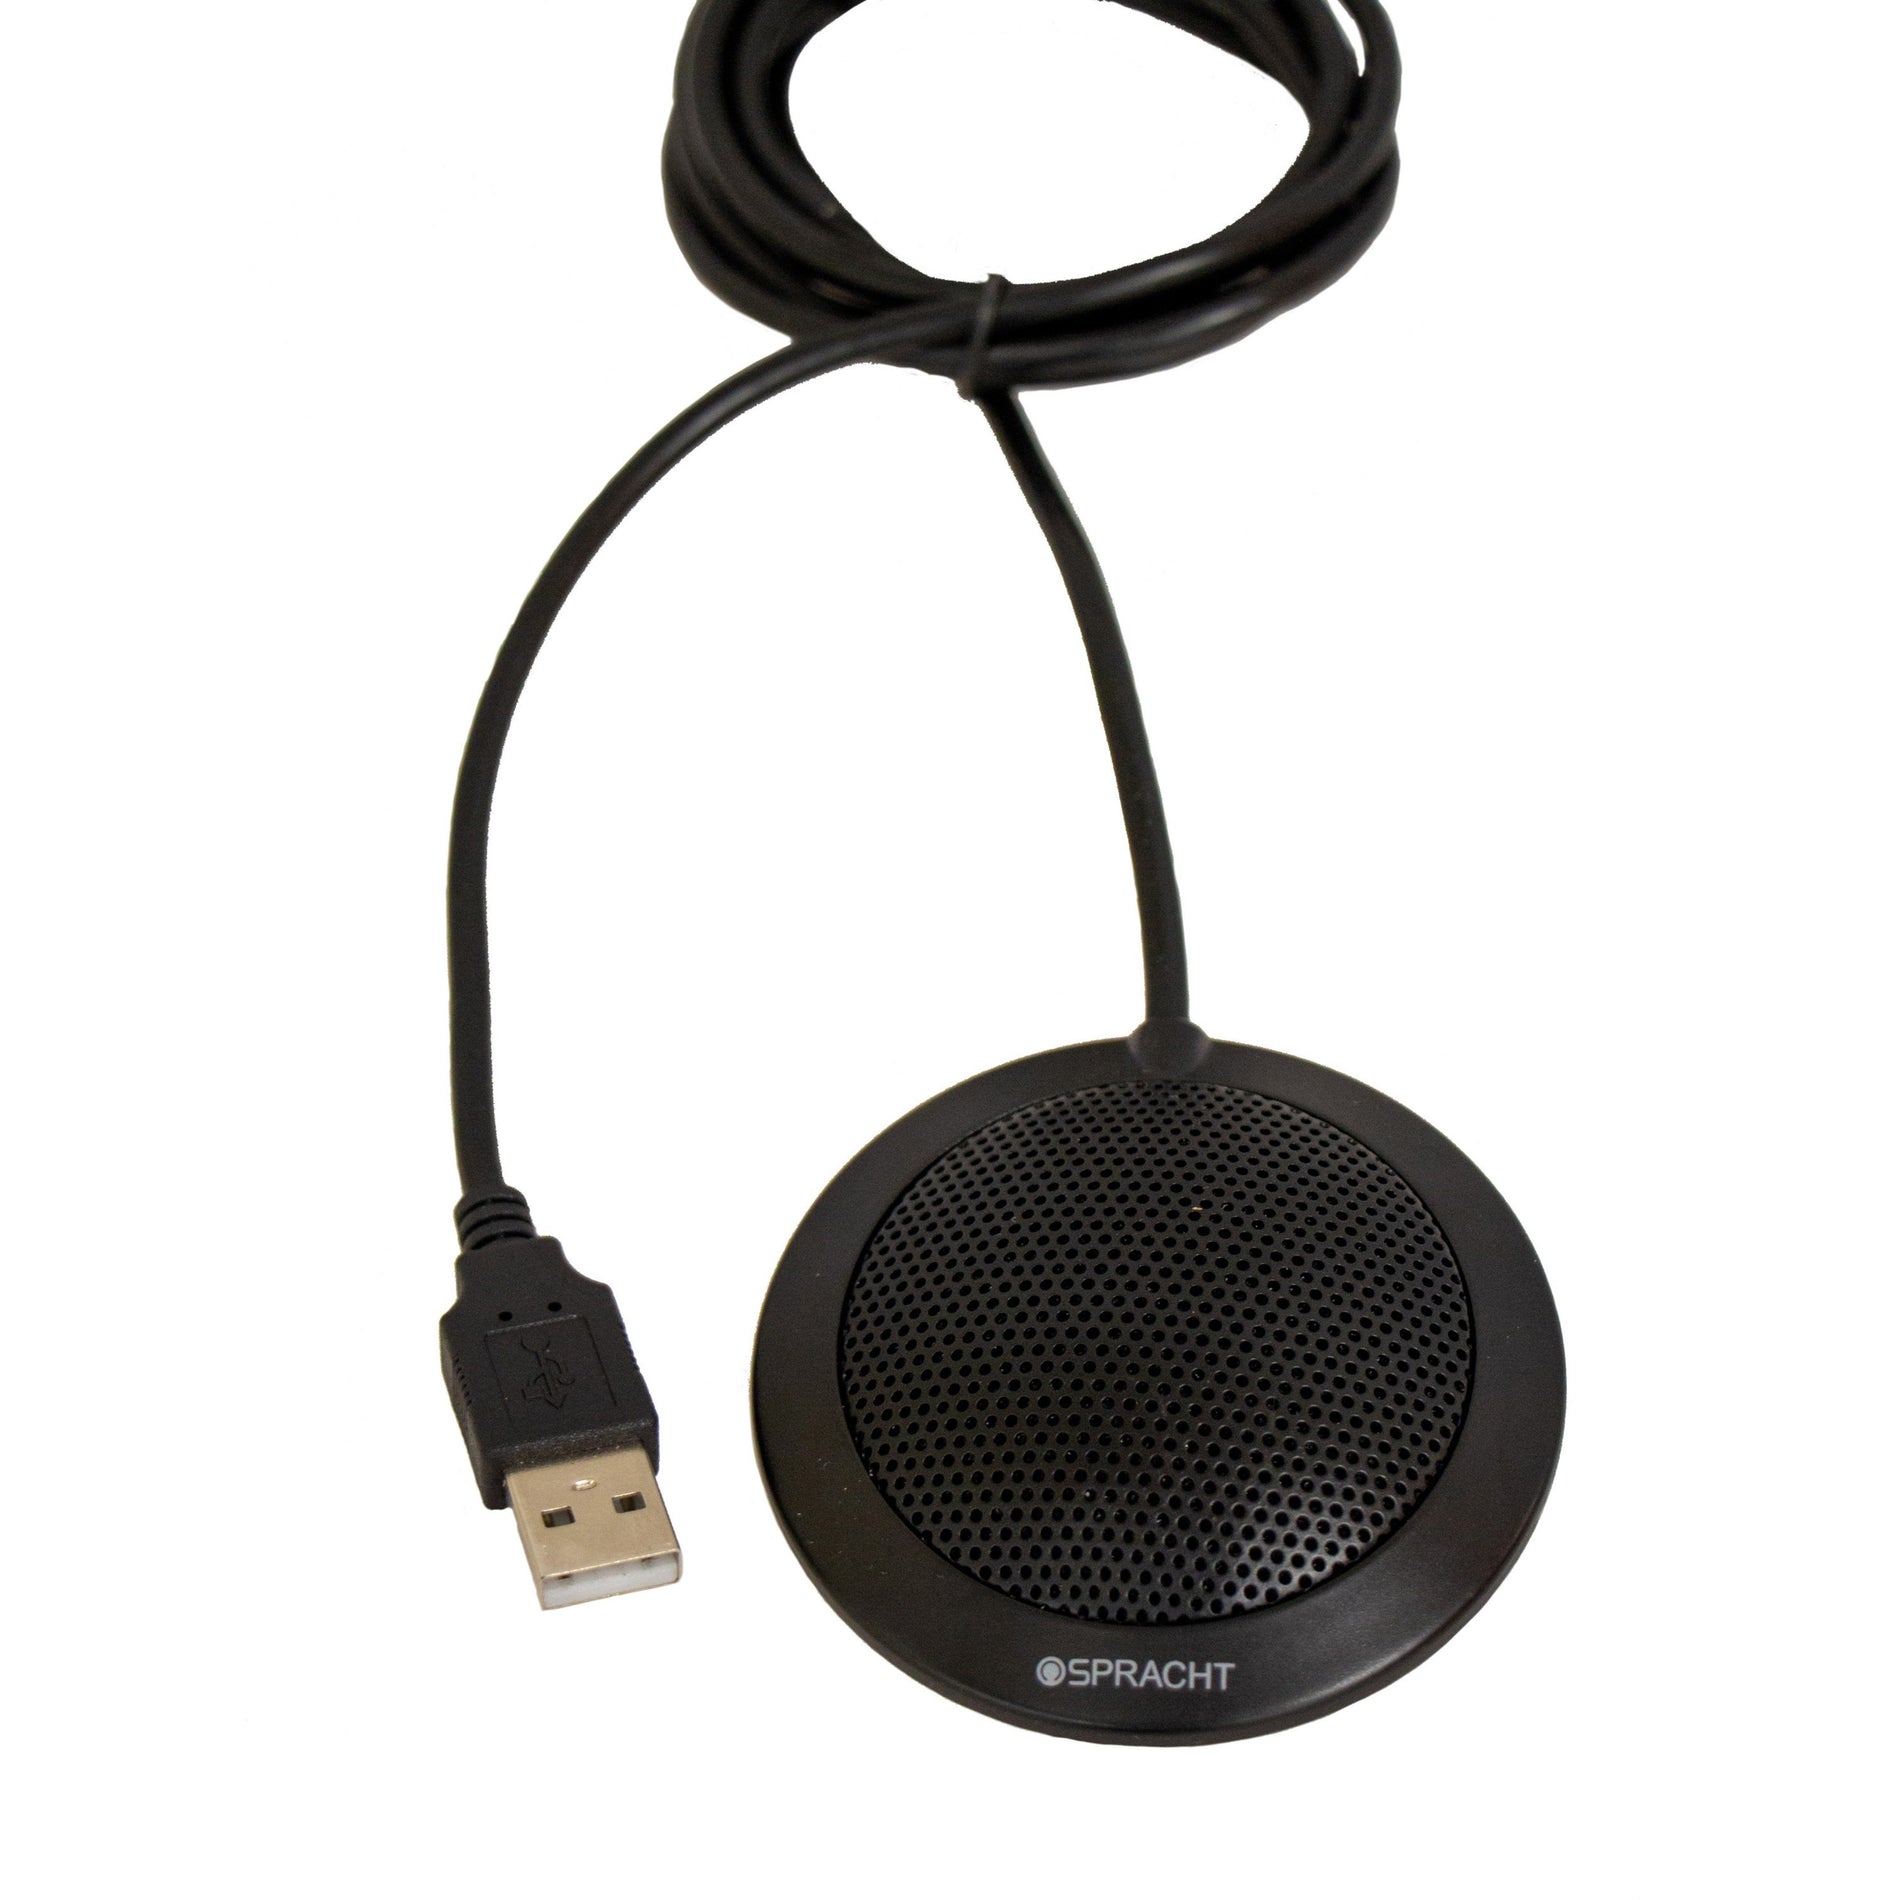 Spracht MIC-2010 Aura USB Mic Digital USB Microphone, Omni-directional, -47 dB Sensitivity, USB 2.0 Interface